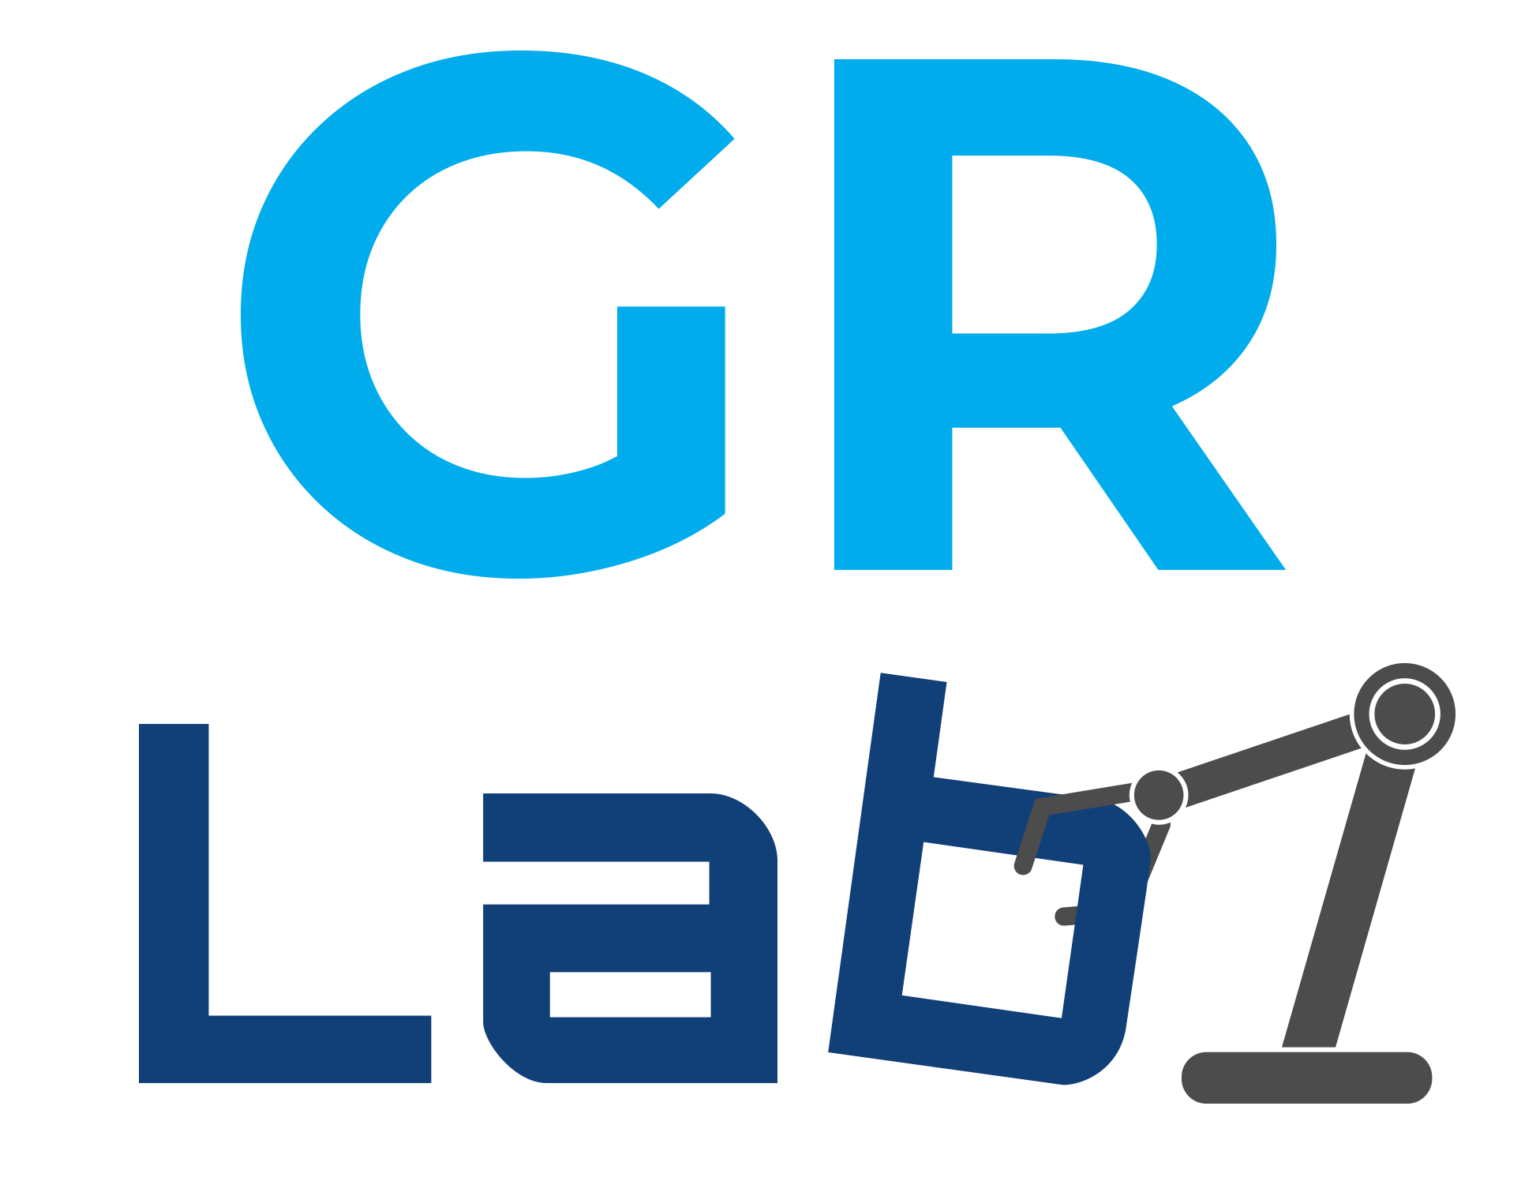 Logo GR Lab